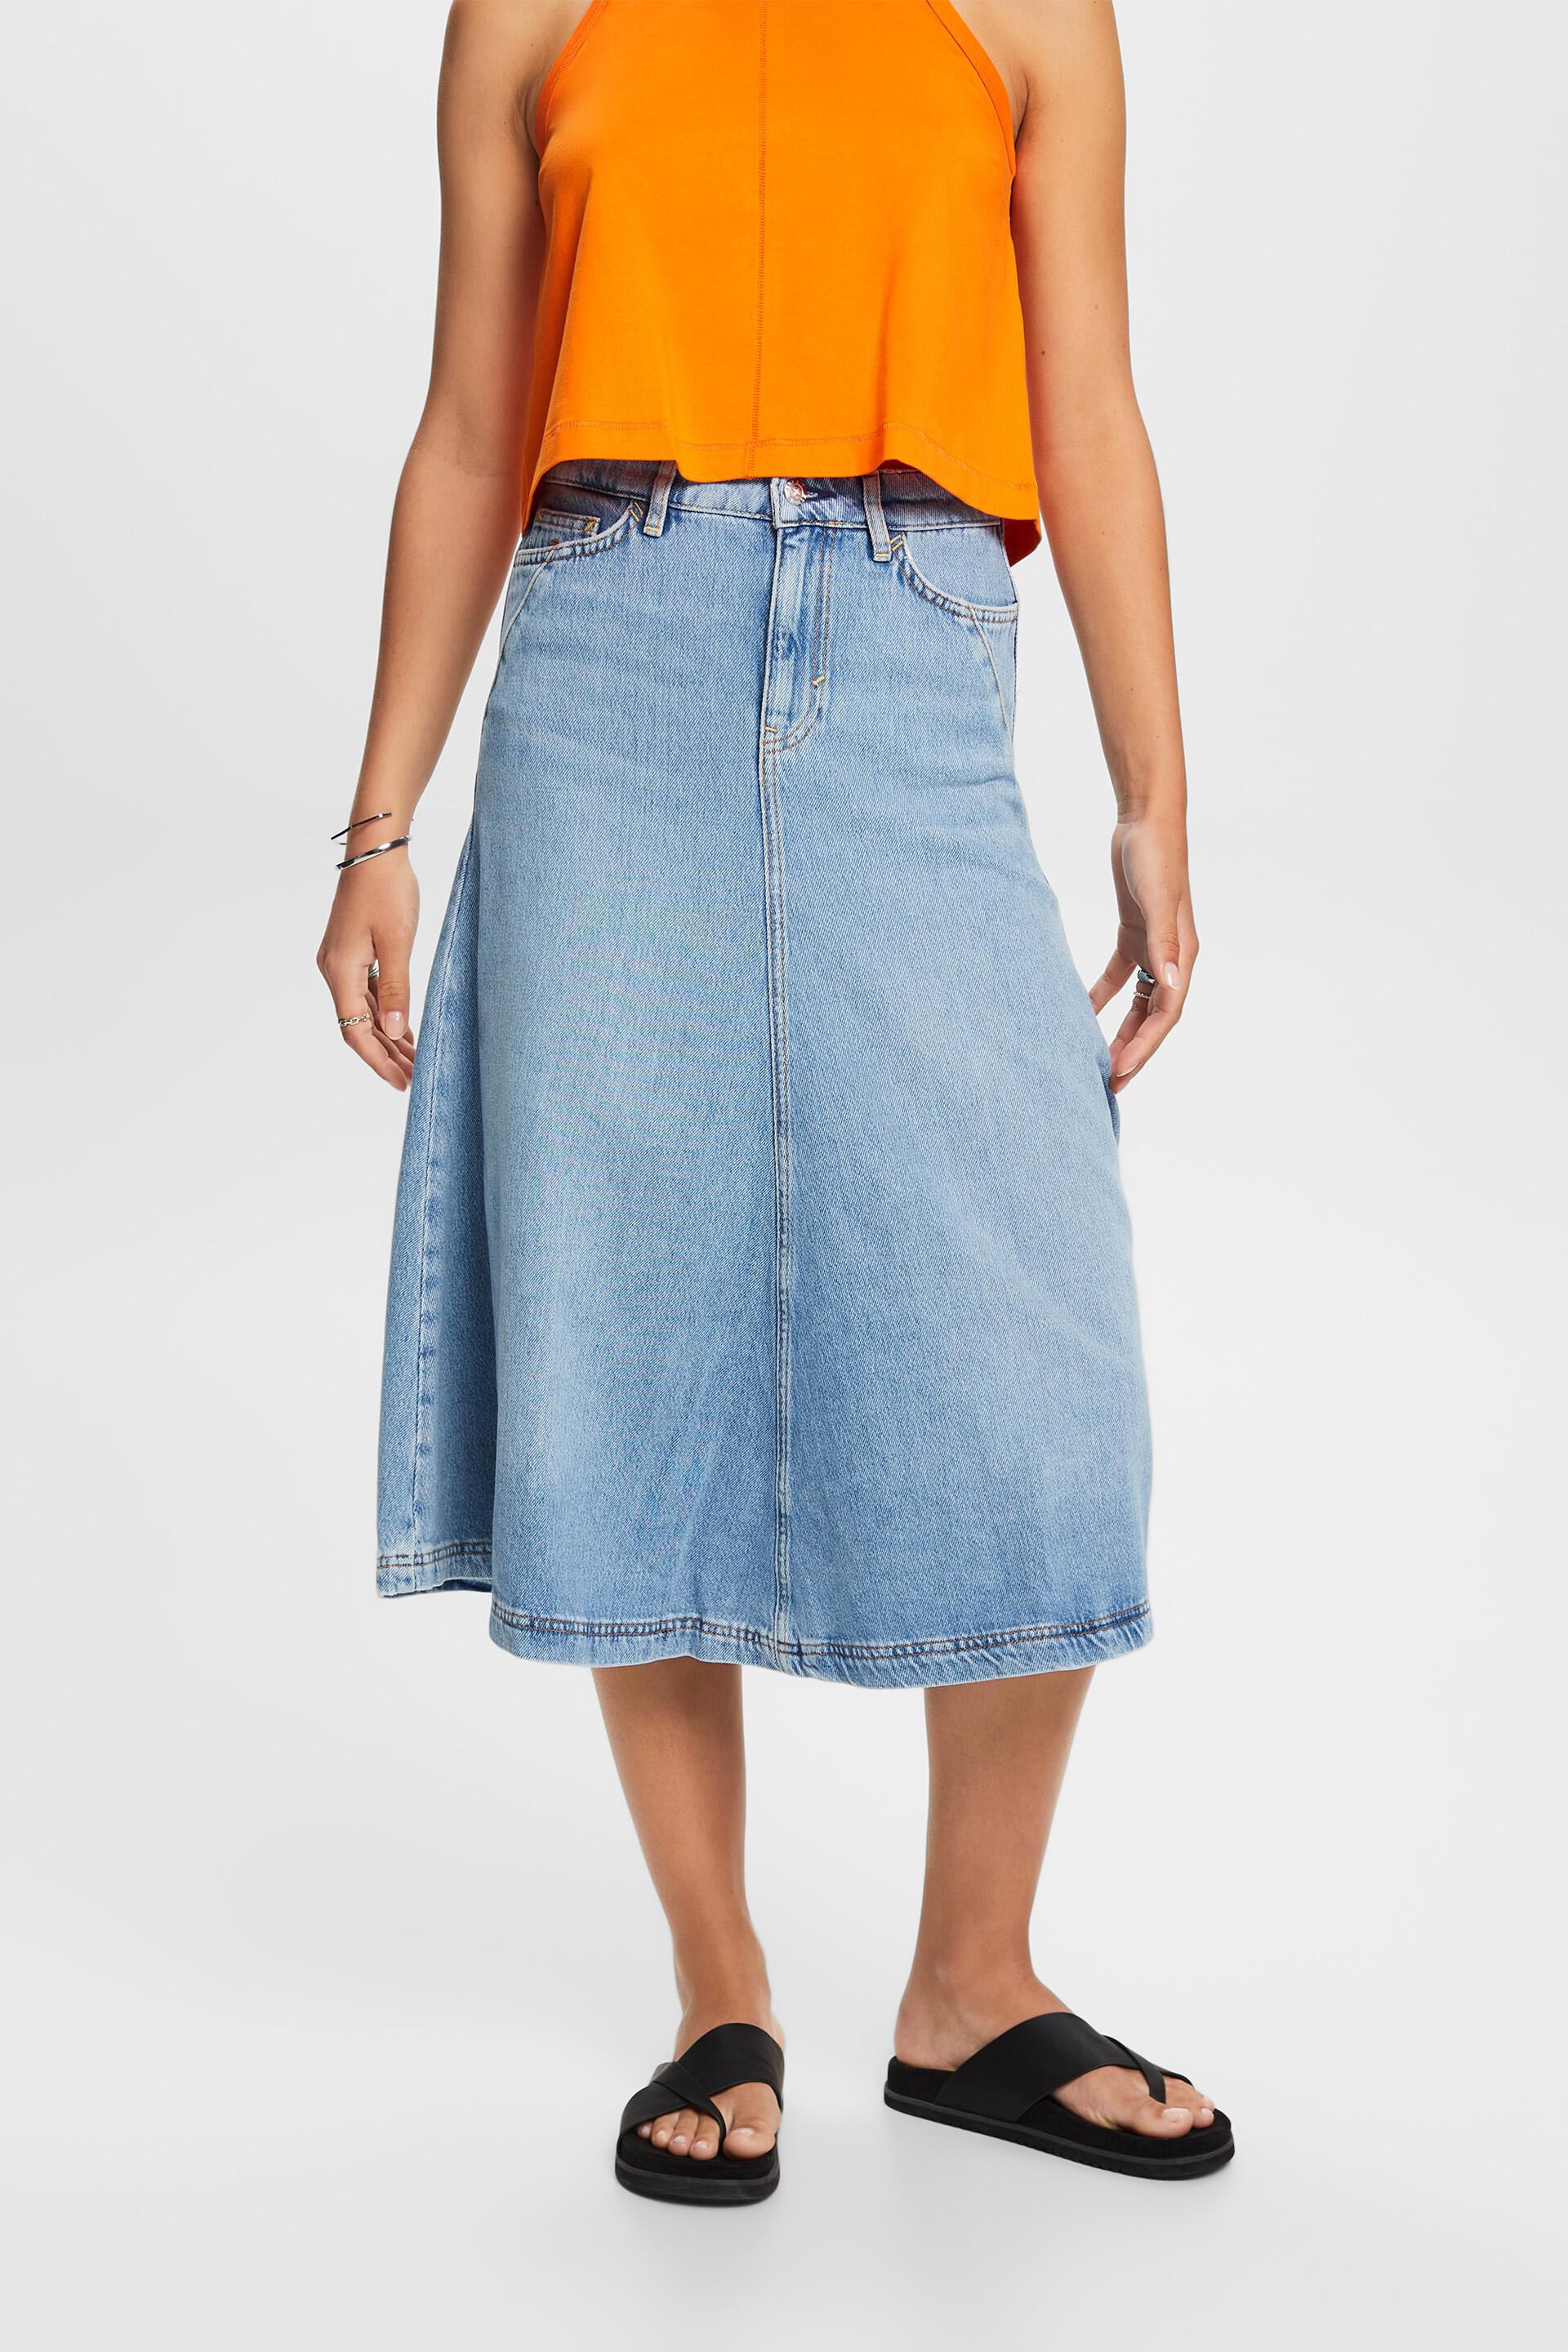 Jeans midi skirt, cotton blend